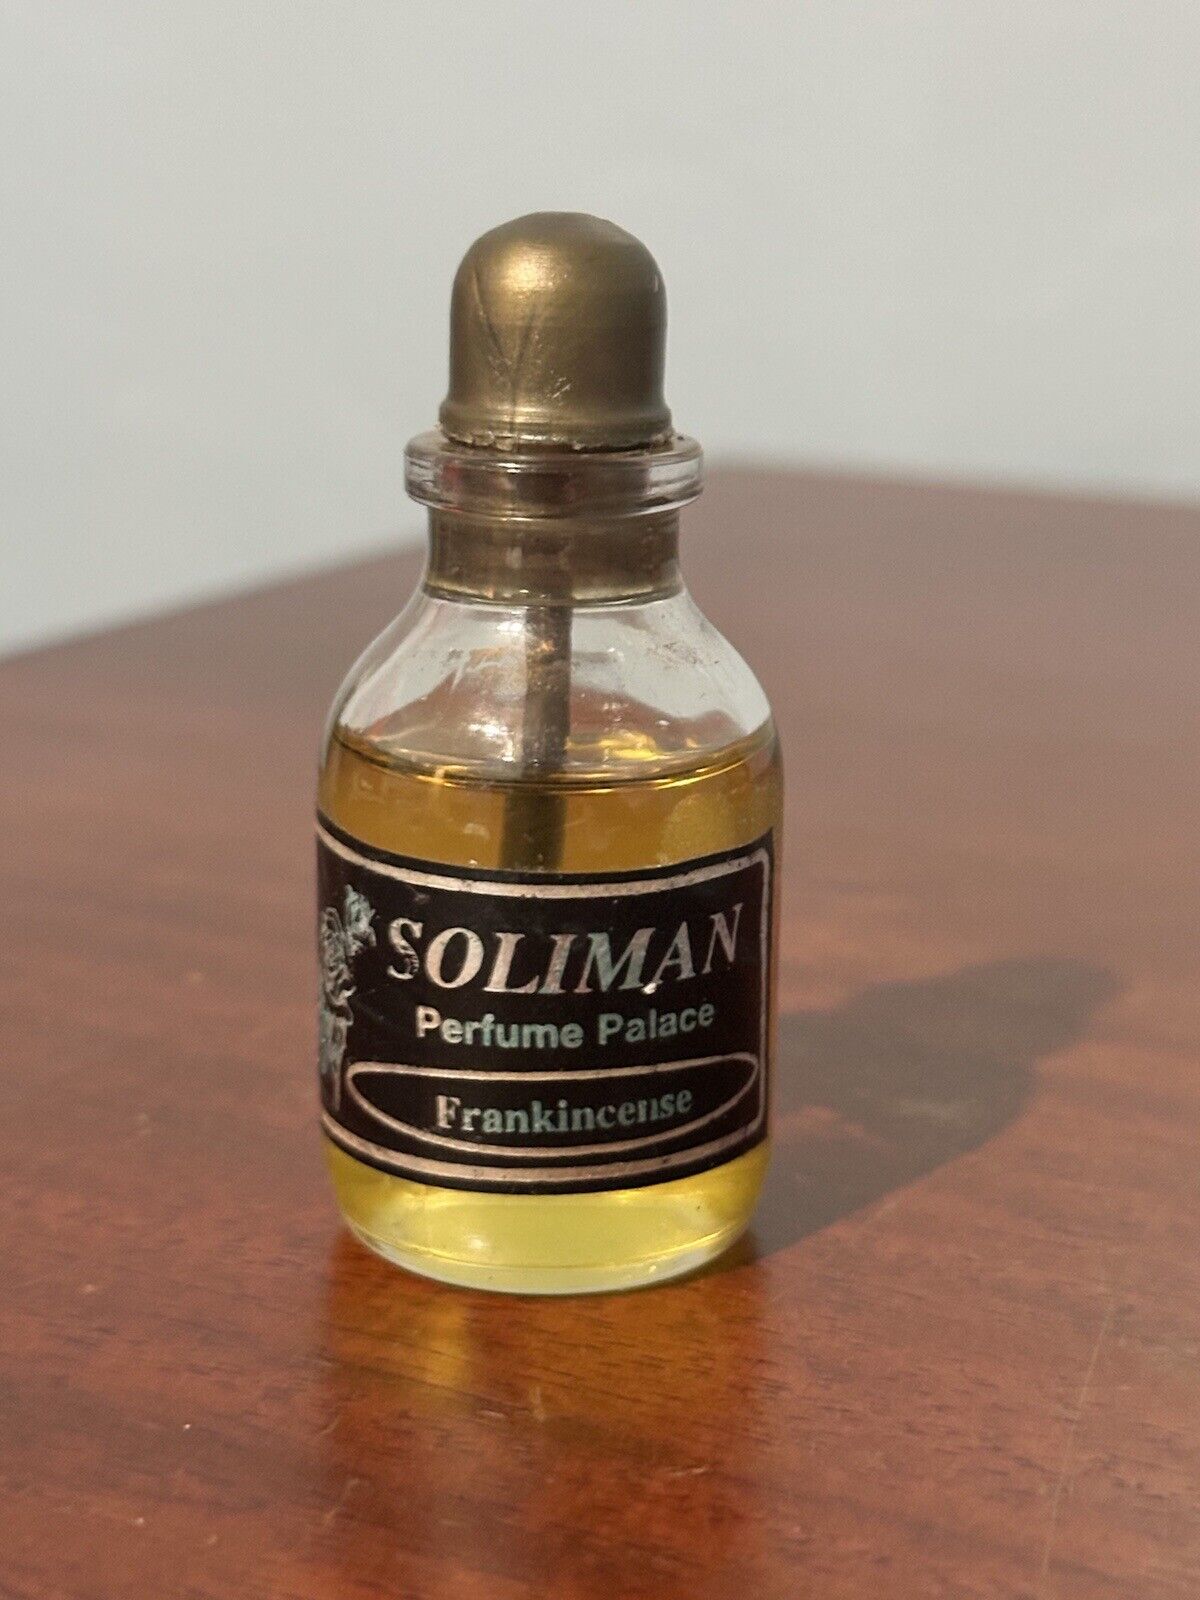 Ahmed Soliman Perfume Palace Frankincense Oil Perfume Mini Bottle ** SEE PHOTOS